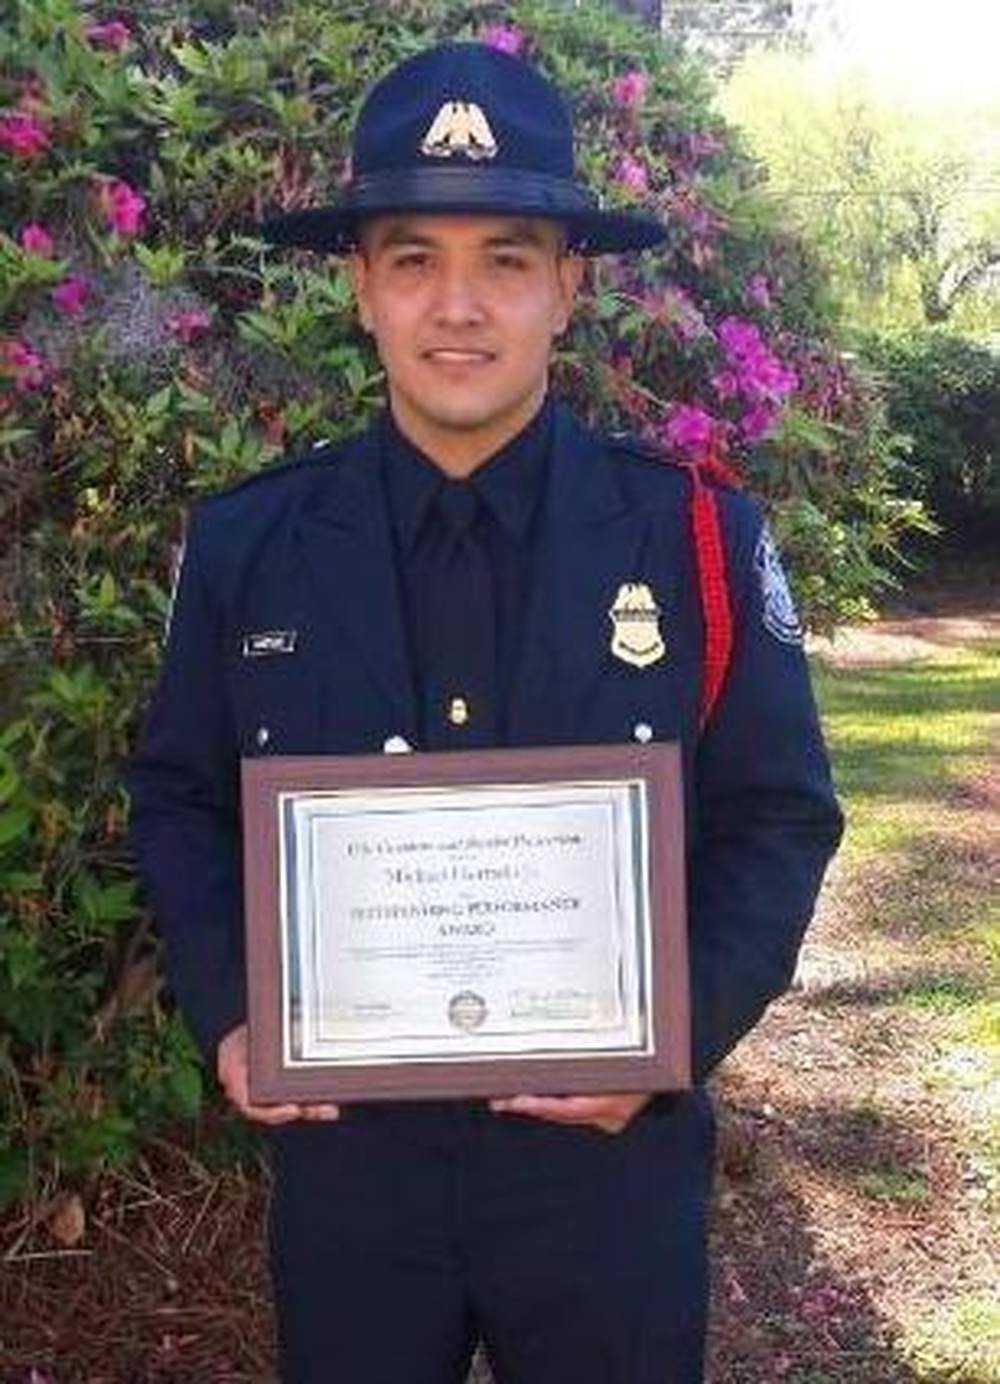 DVIDS News Lt. Hurtado graduates from CBP Officer Academy